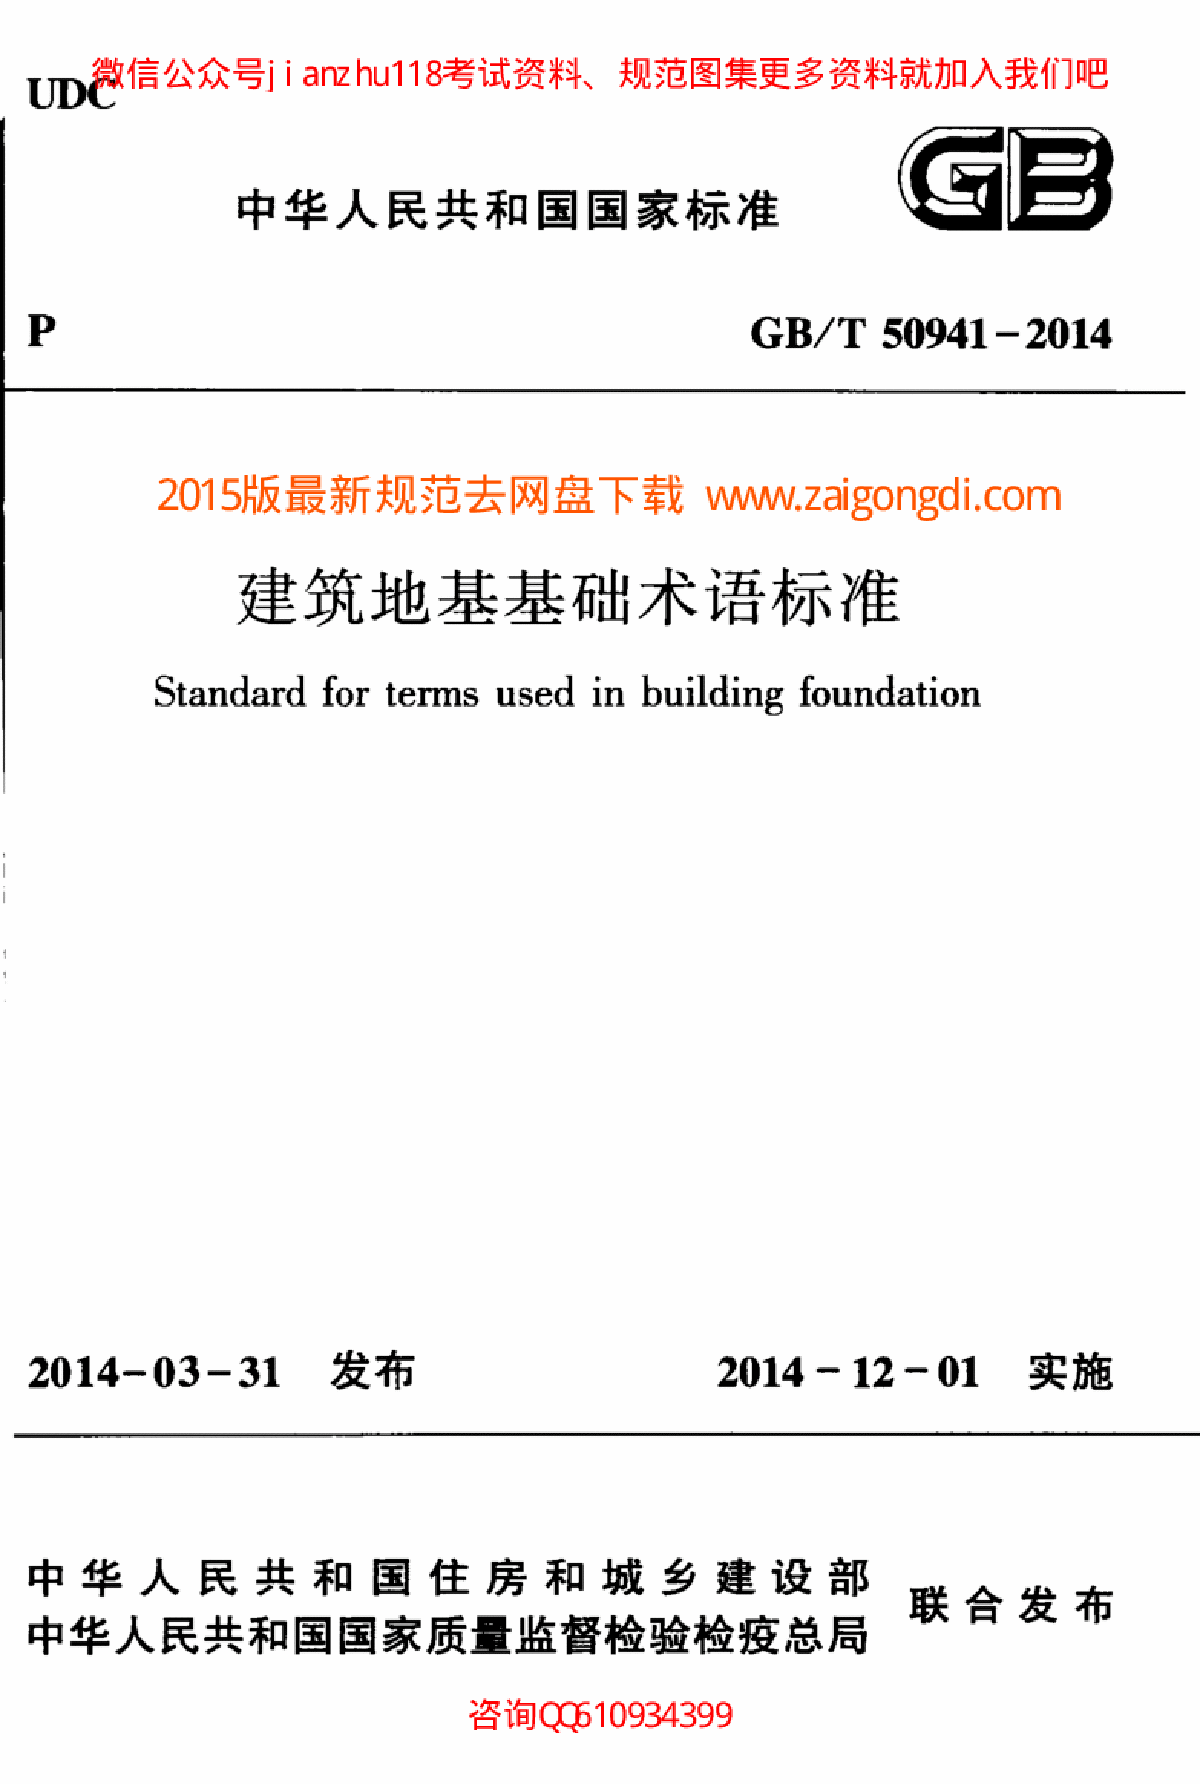 GBT 50941-2014 建筑地基基础术语标准-图一